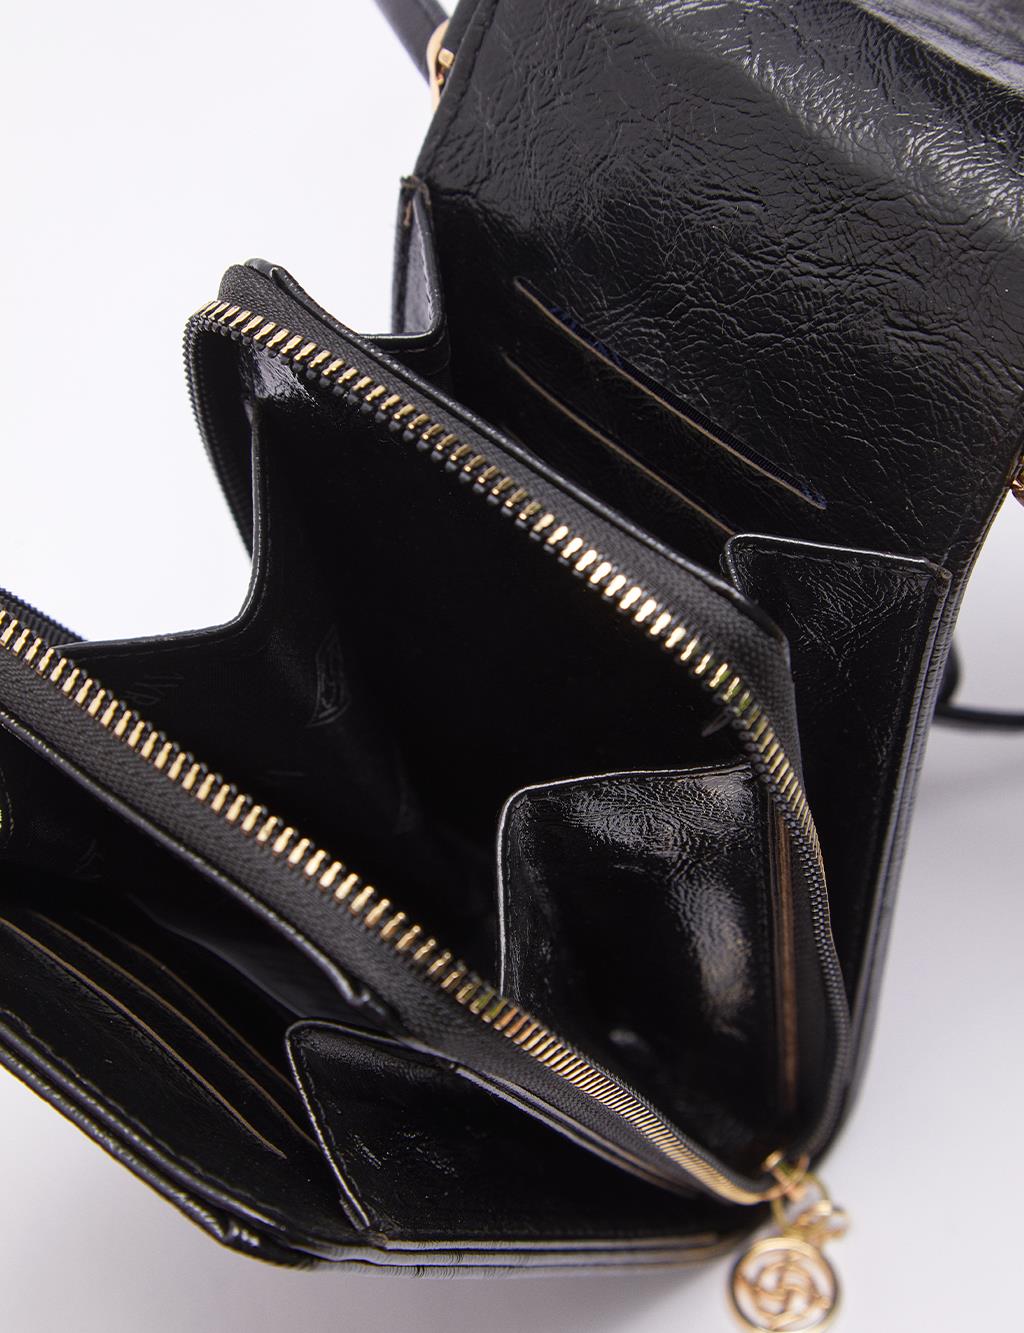 Clamshell Wrinkled Patent Leather Wallet Bag Black